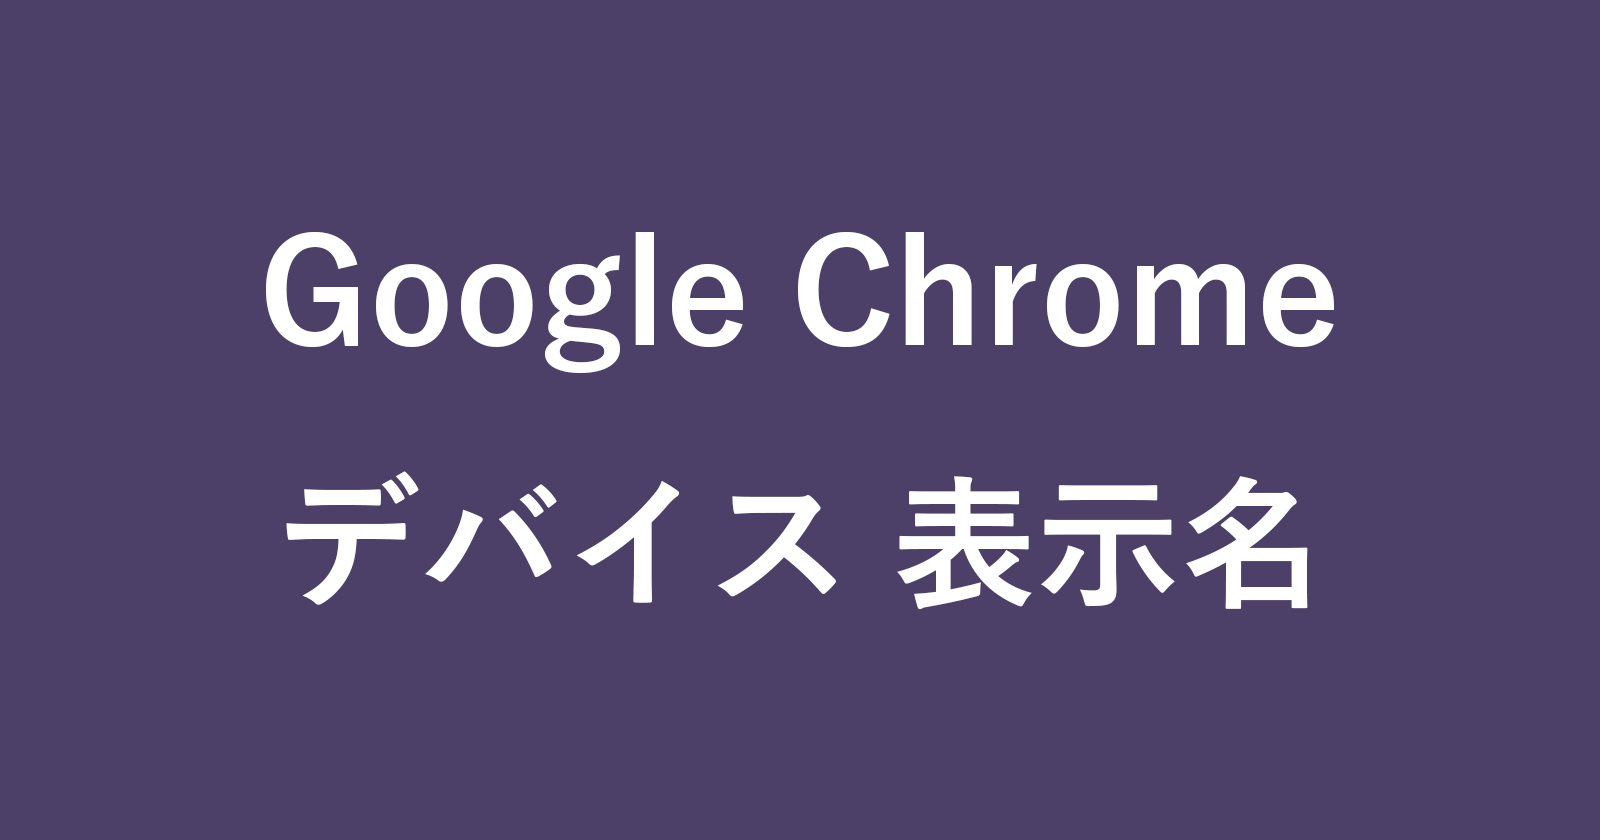 chrome device name